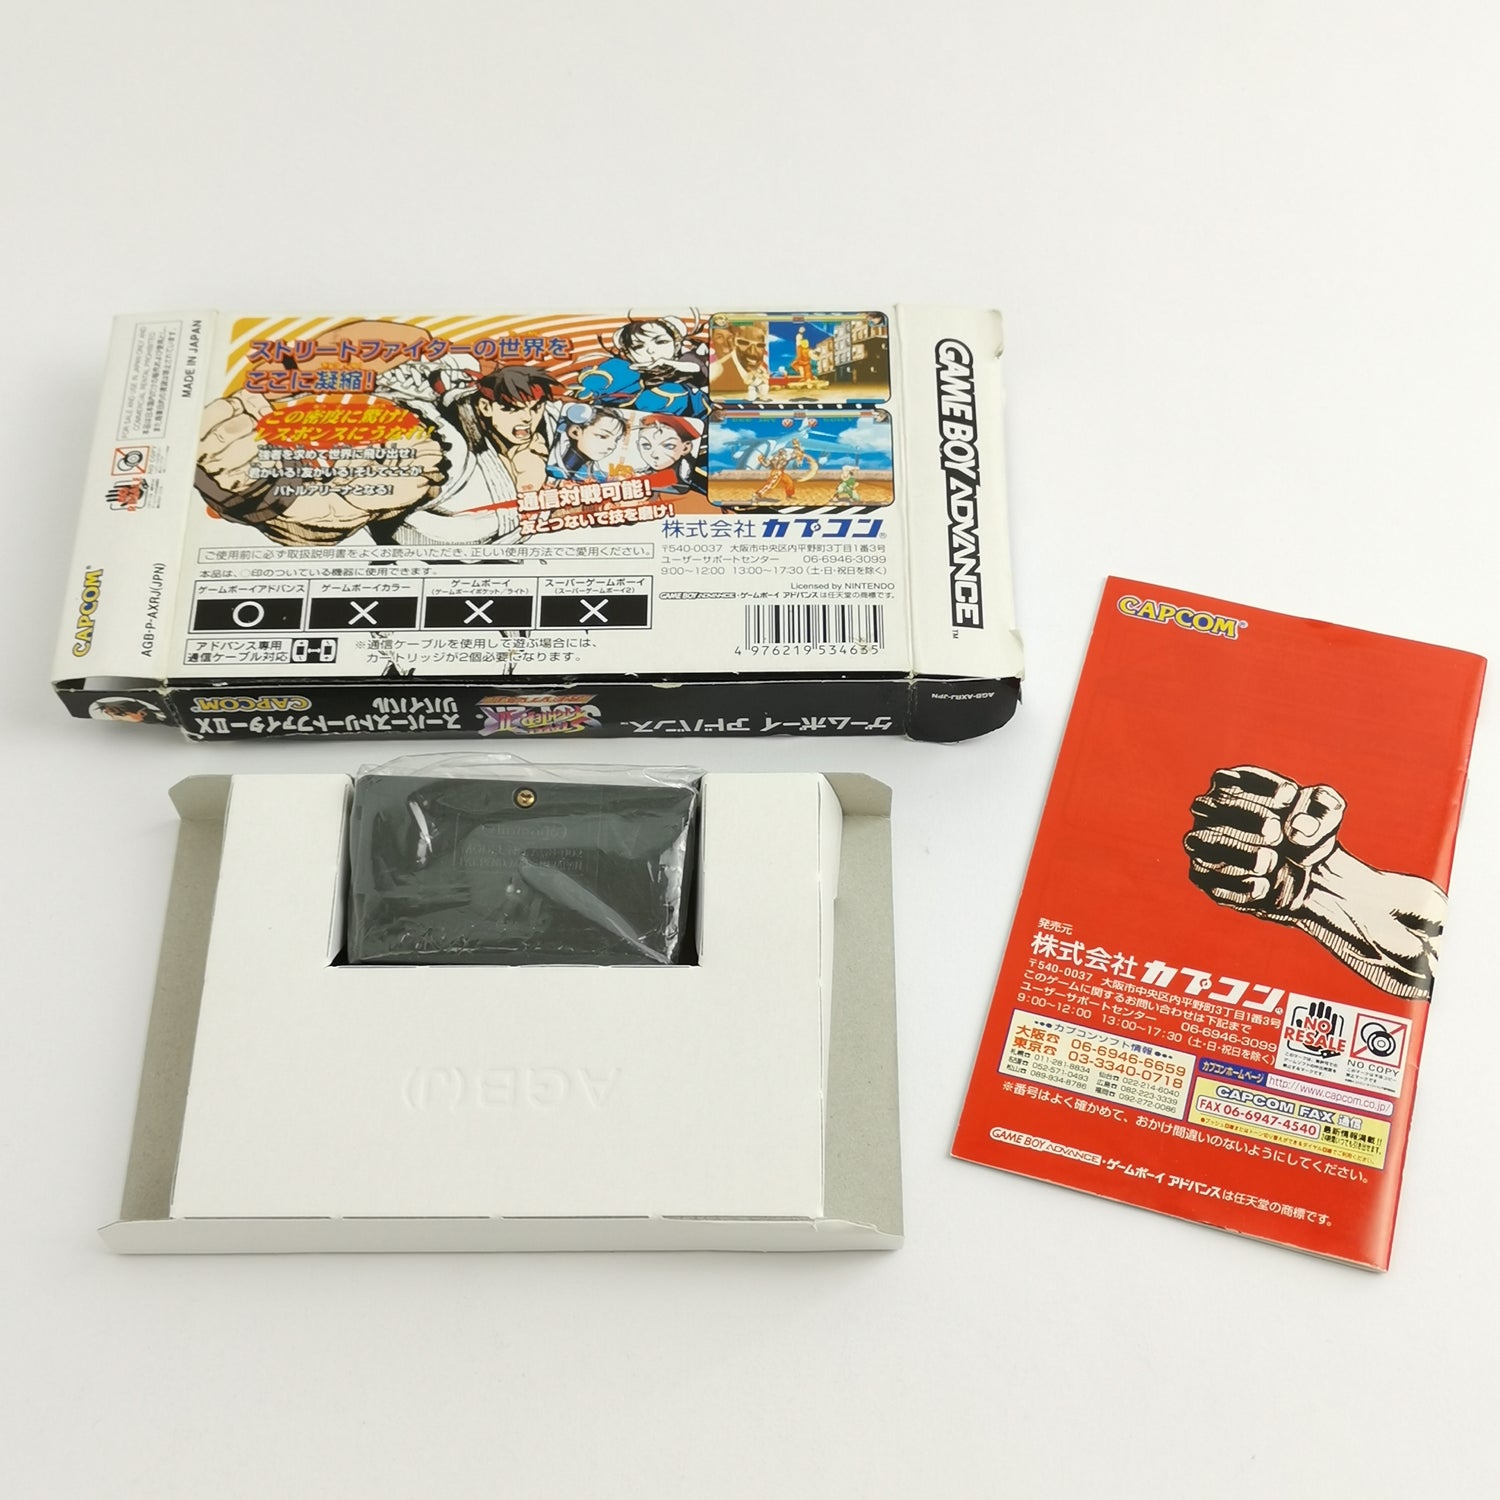 Nintendo Game Boy Advance Game: Street Fighter II 2 Revival - OVP JAPAN GBA